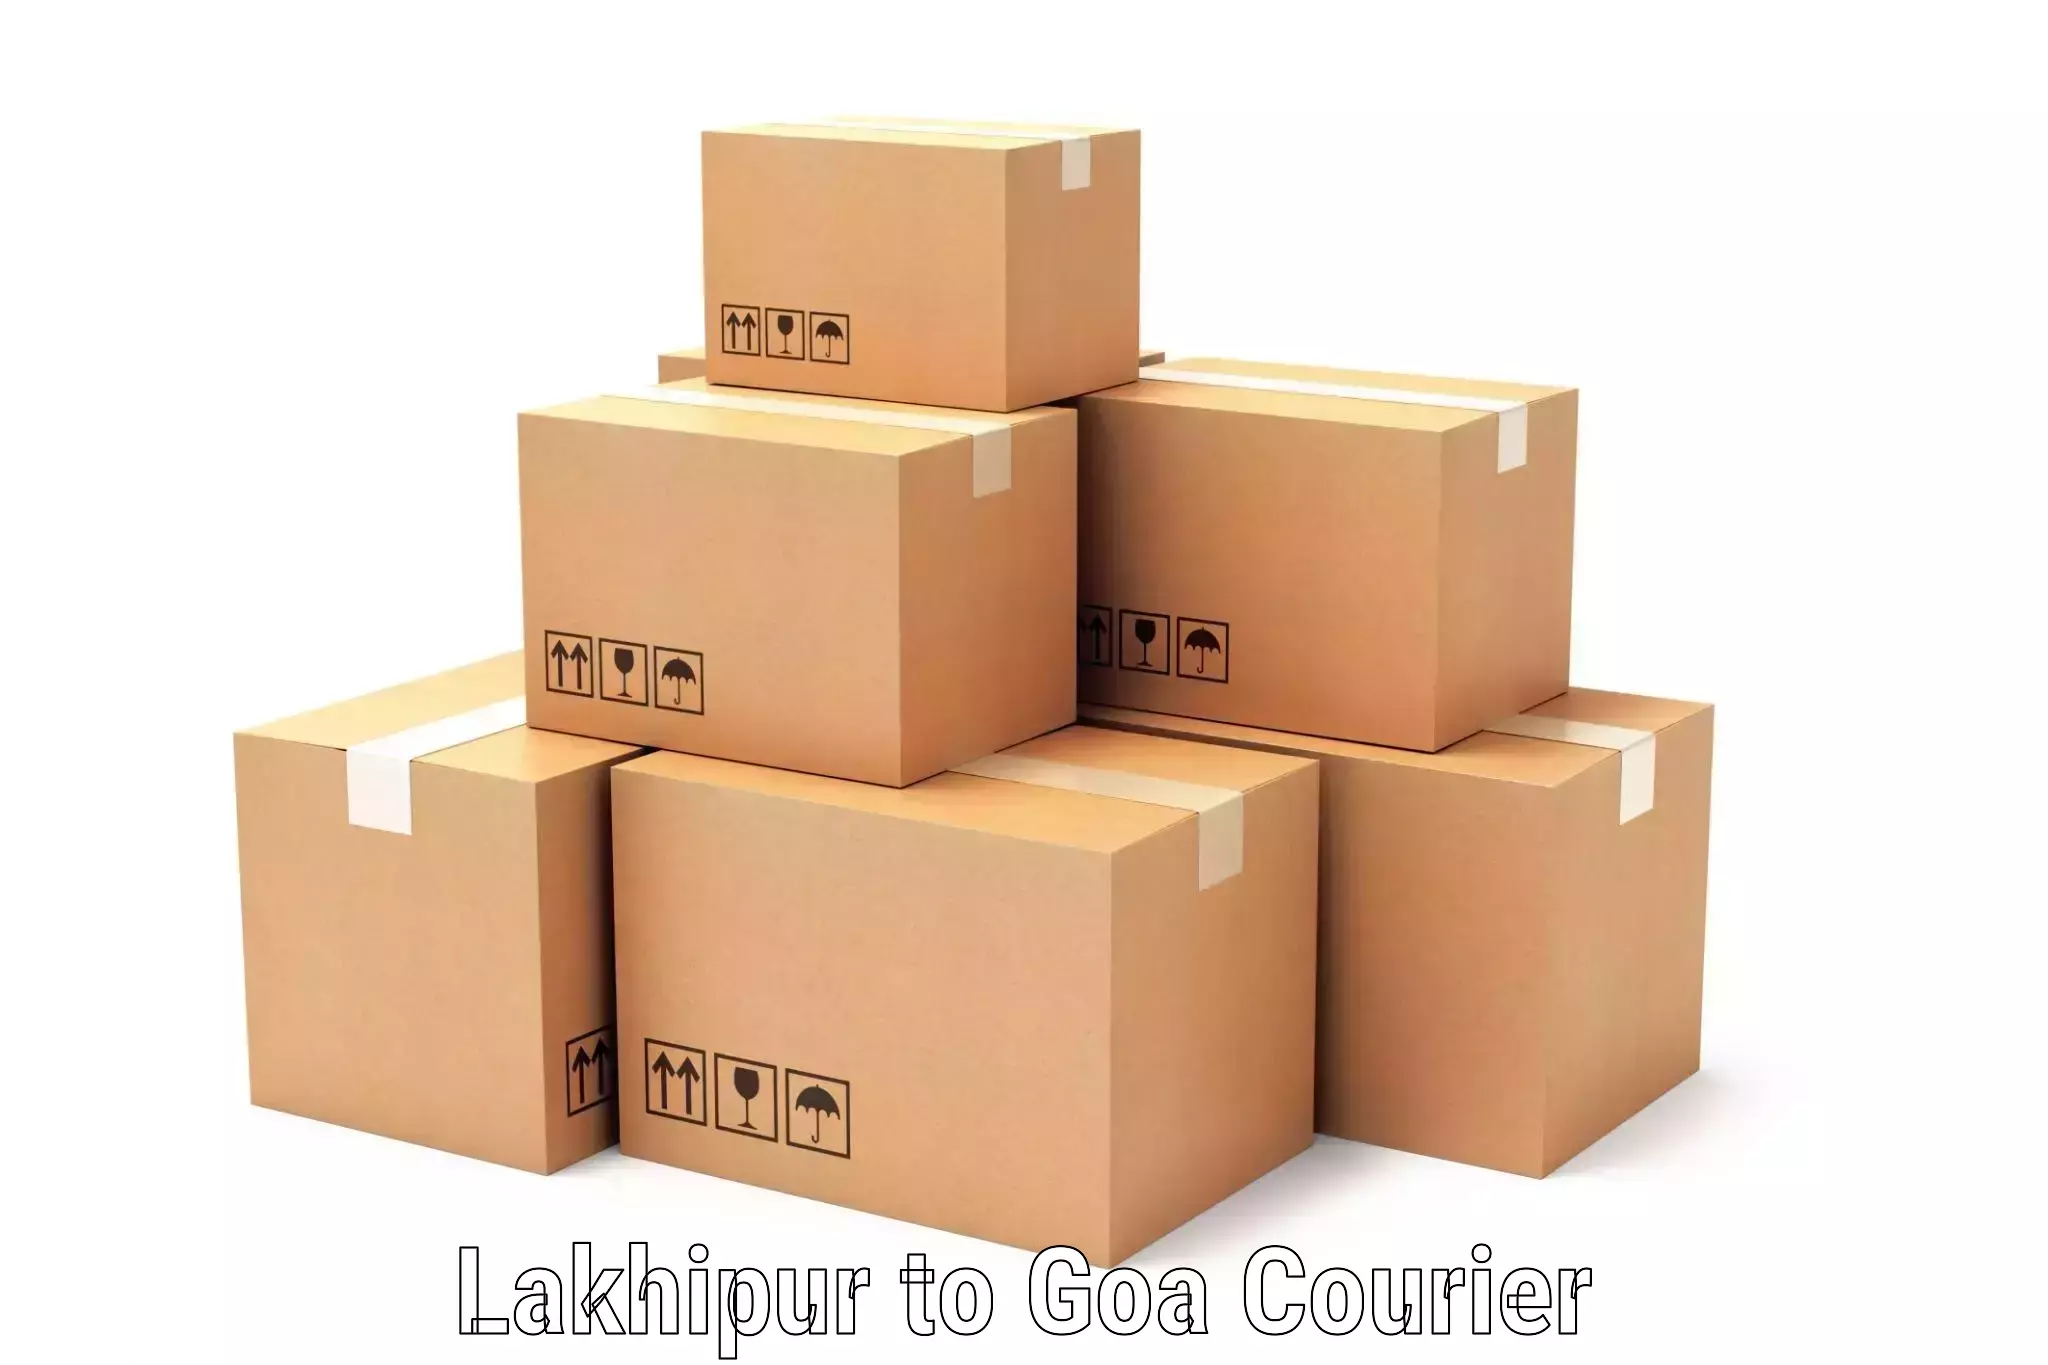 Efficient cargo handling Lakhipur to Goa